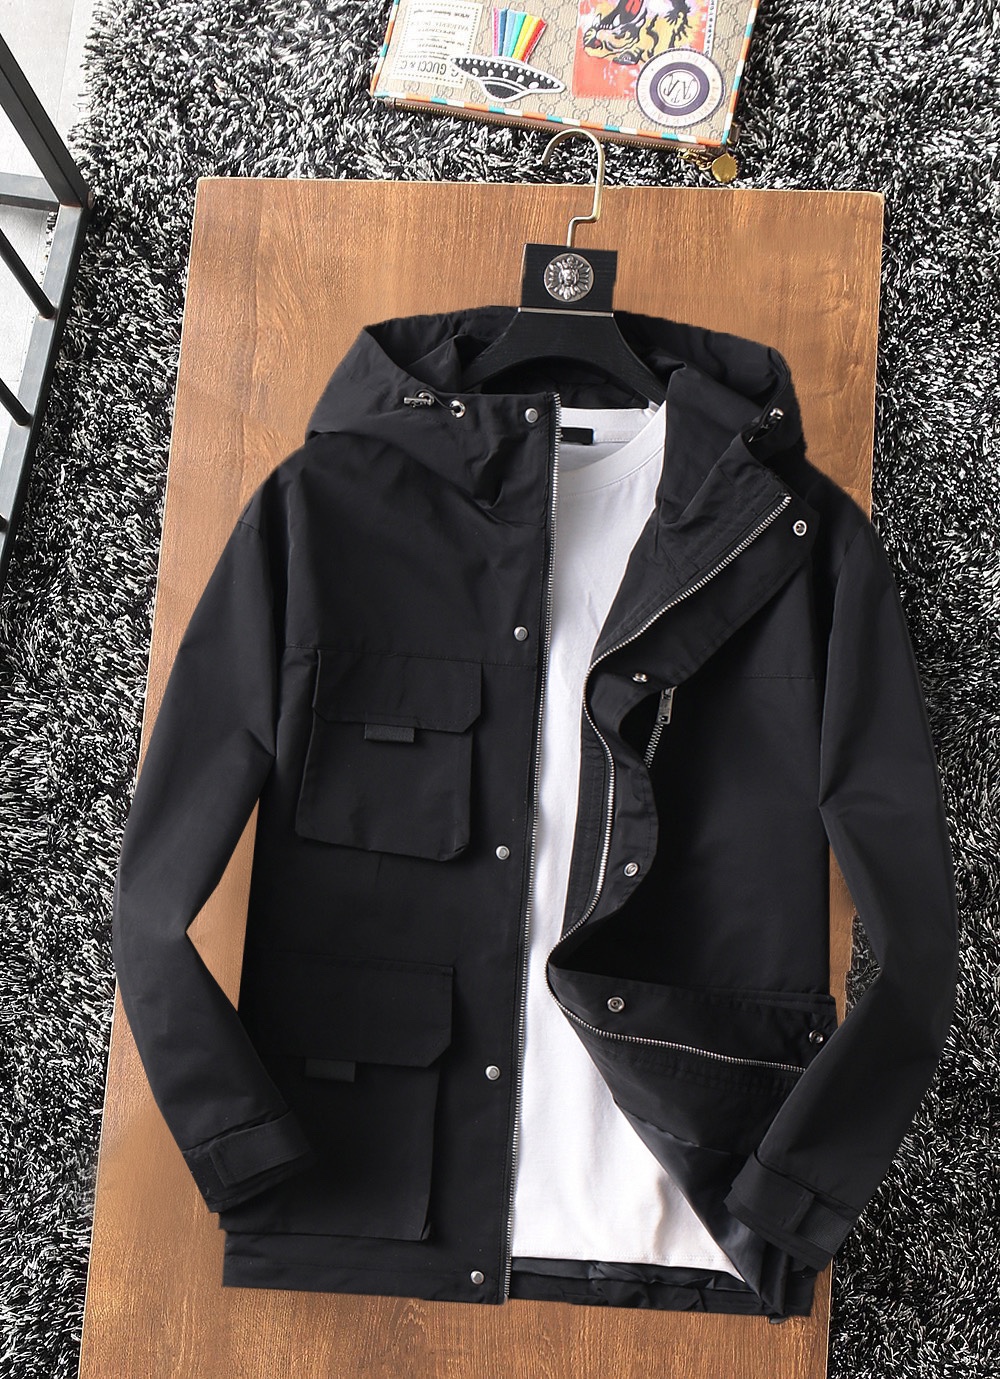 Prada Clothing Coats & Jackets Spring Collection Fashion Casual